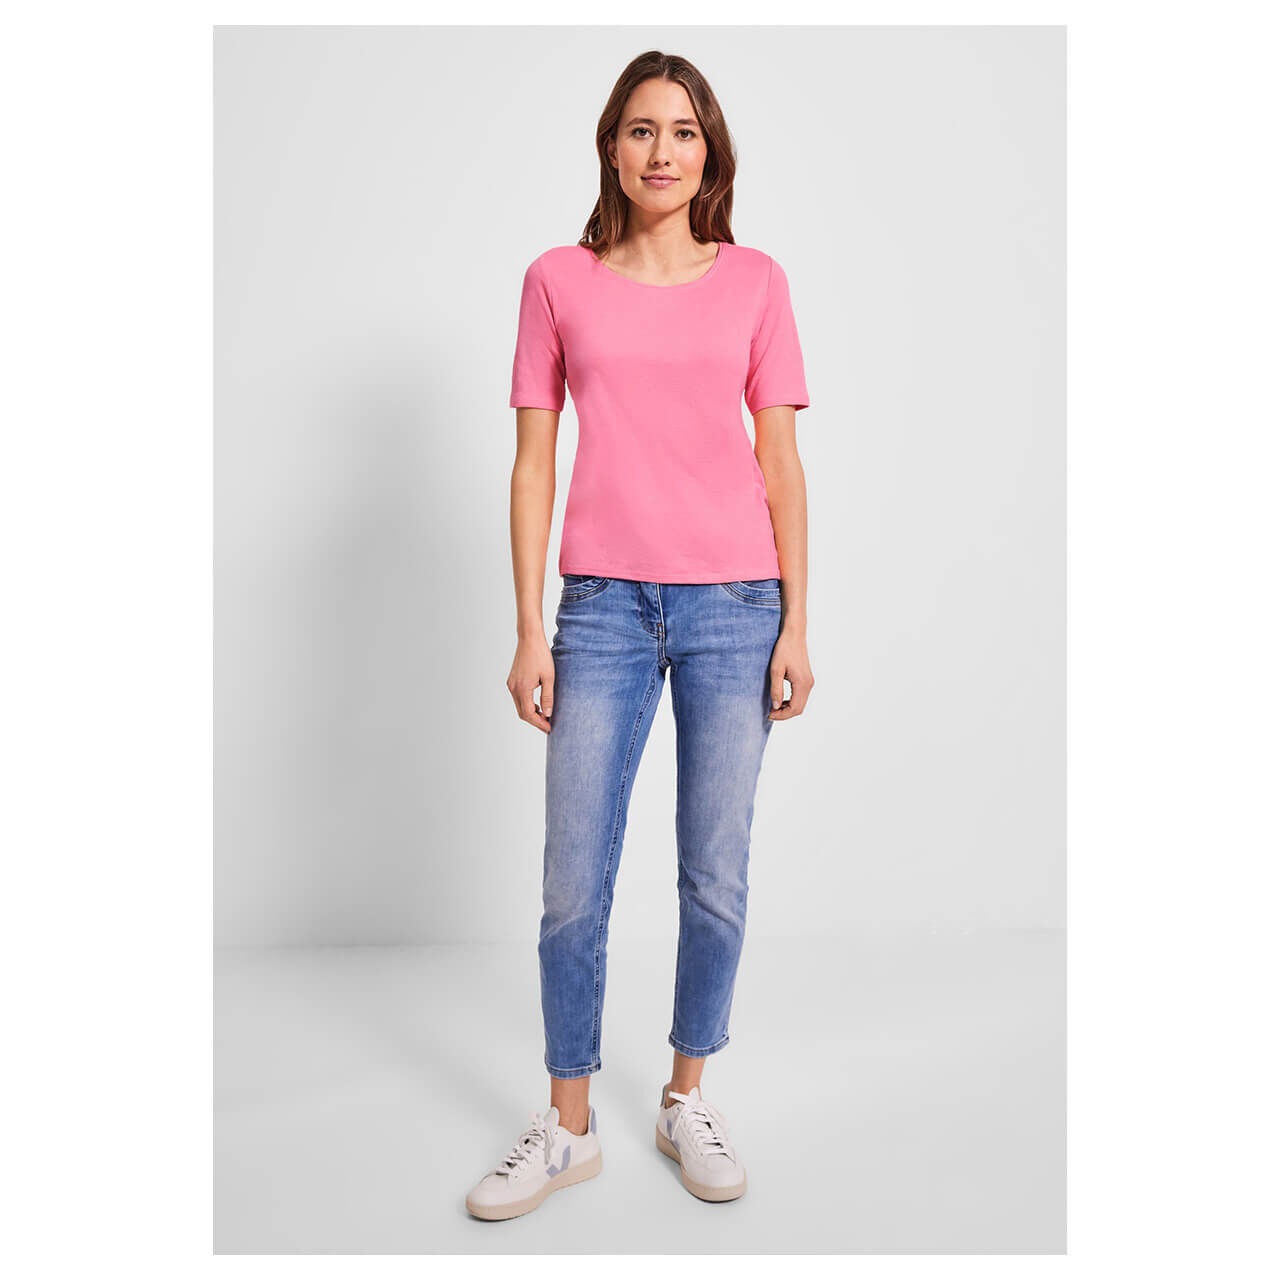 Cecil Lena T-Shirt soft pink